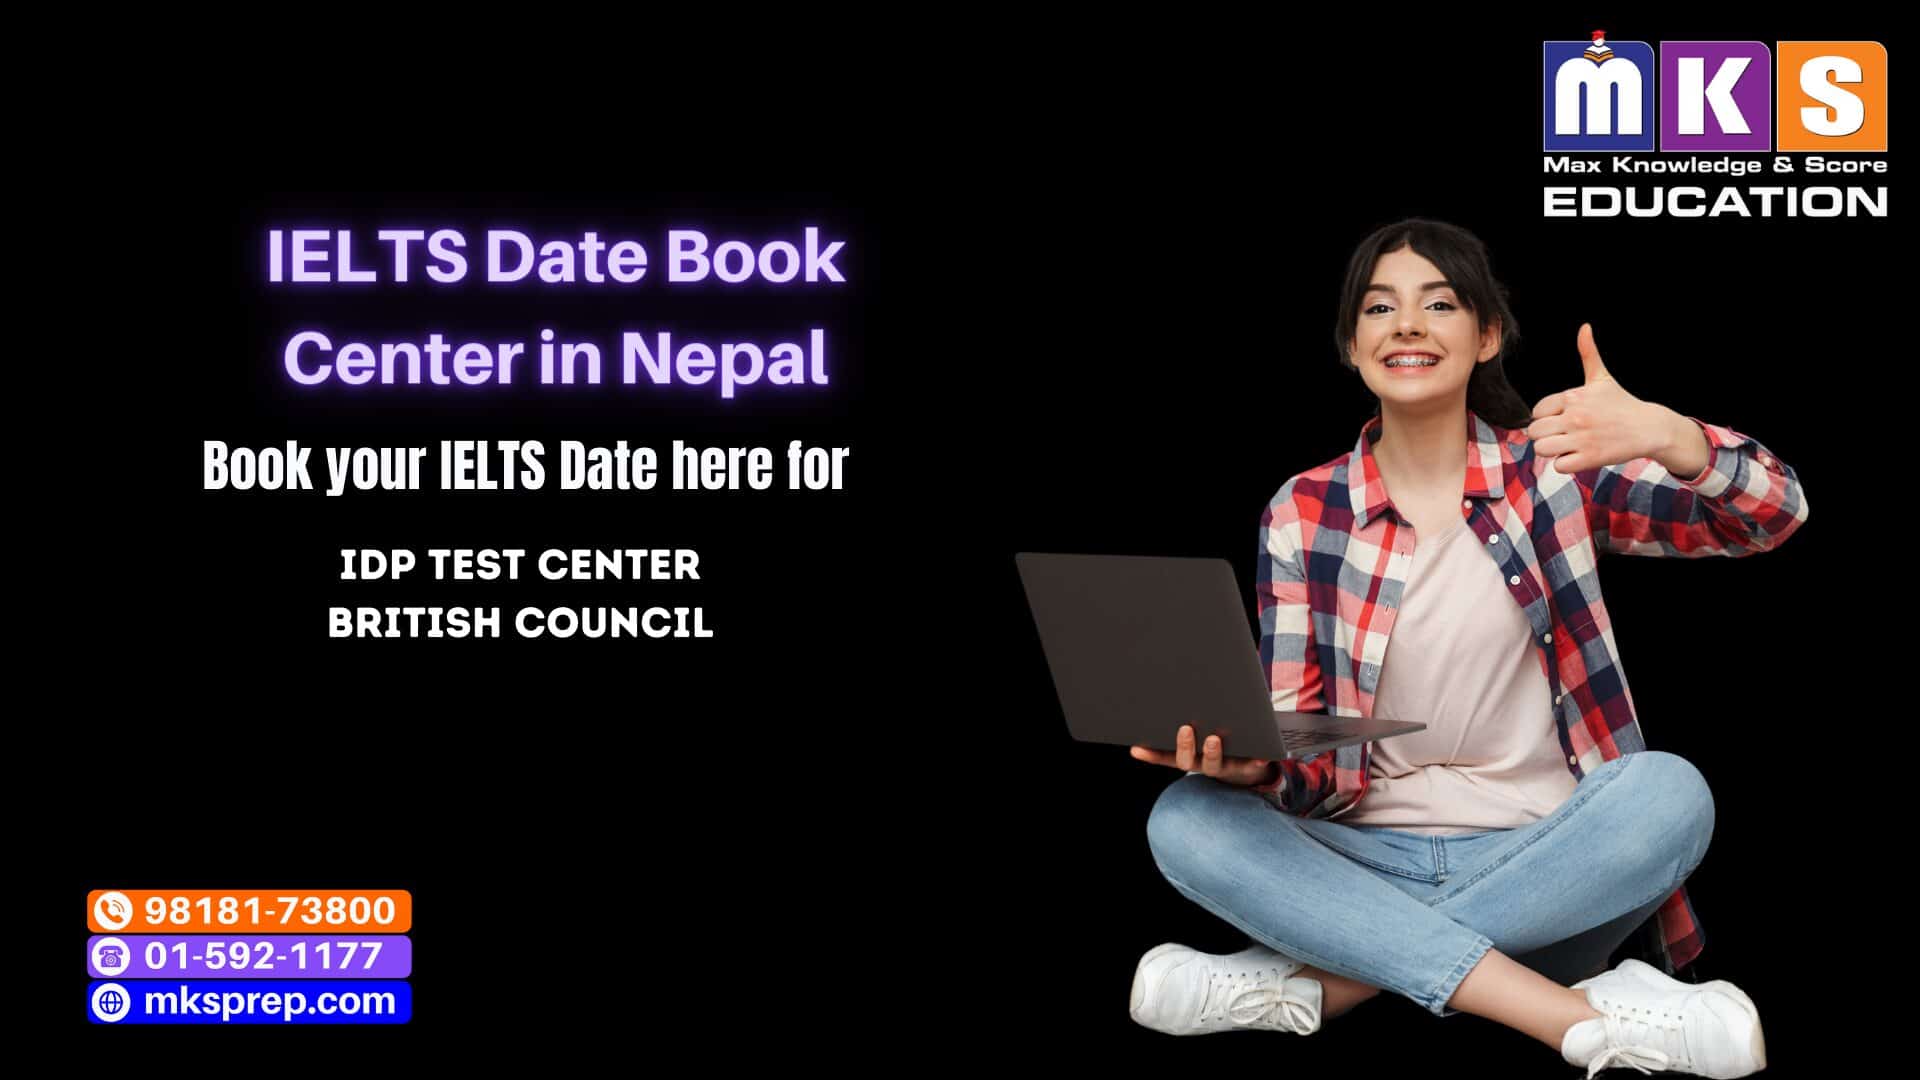 IELTS Date Book Center in Nepal